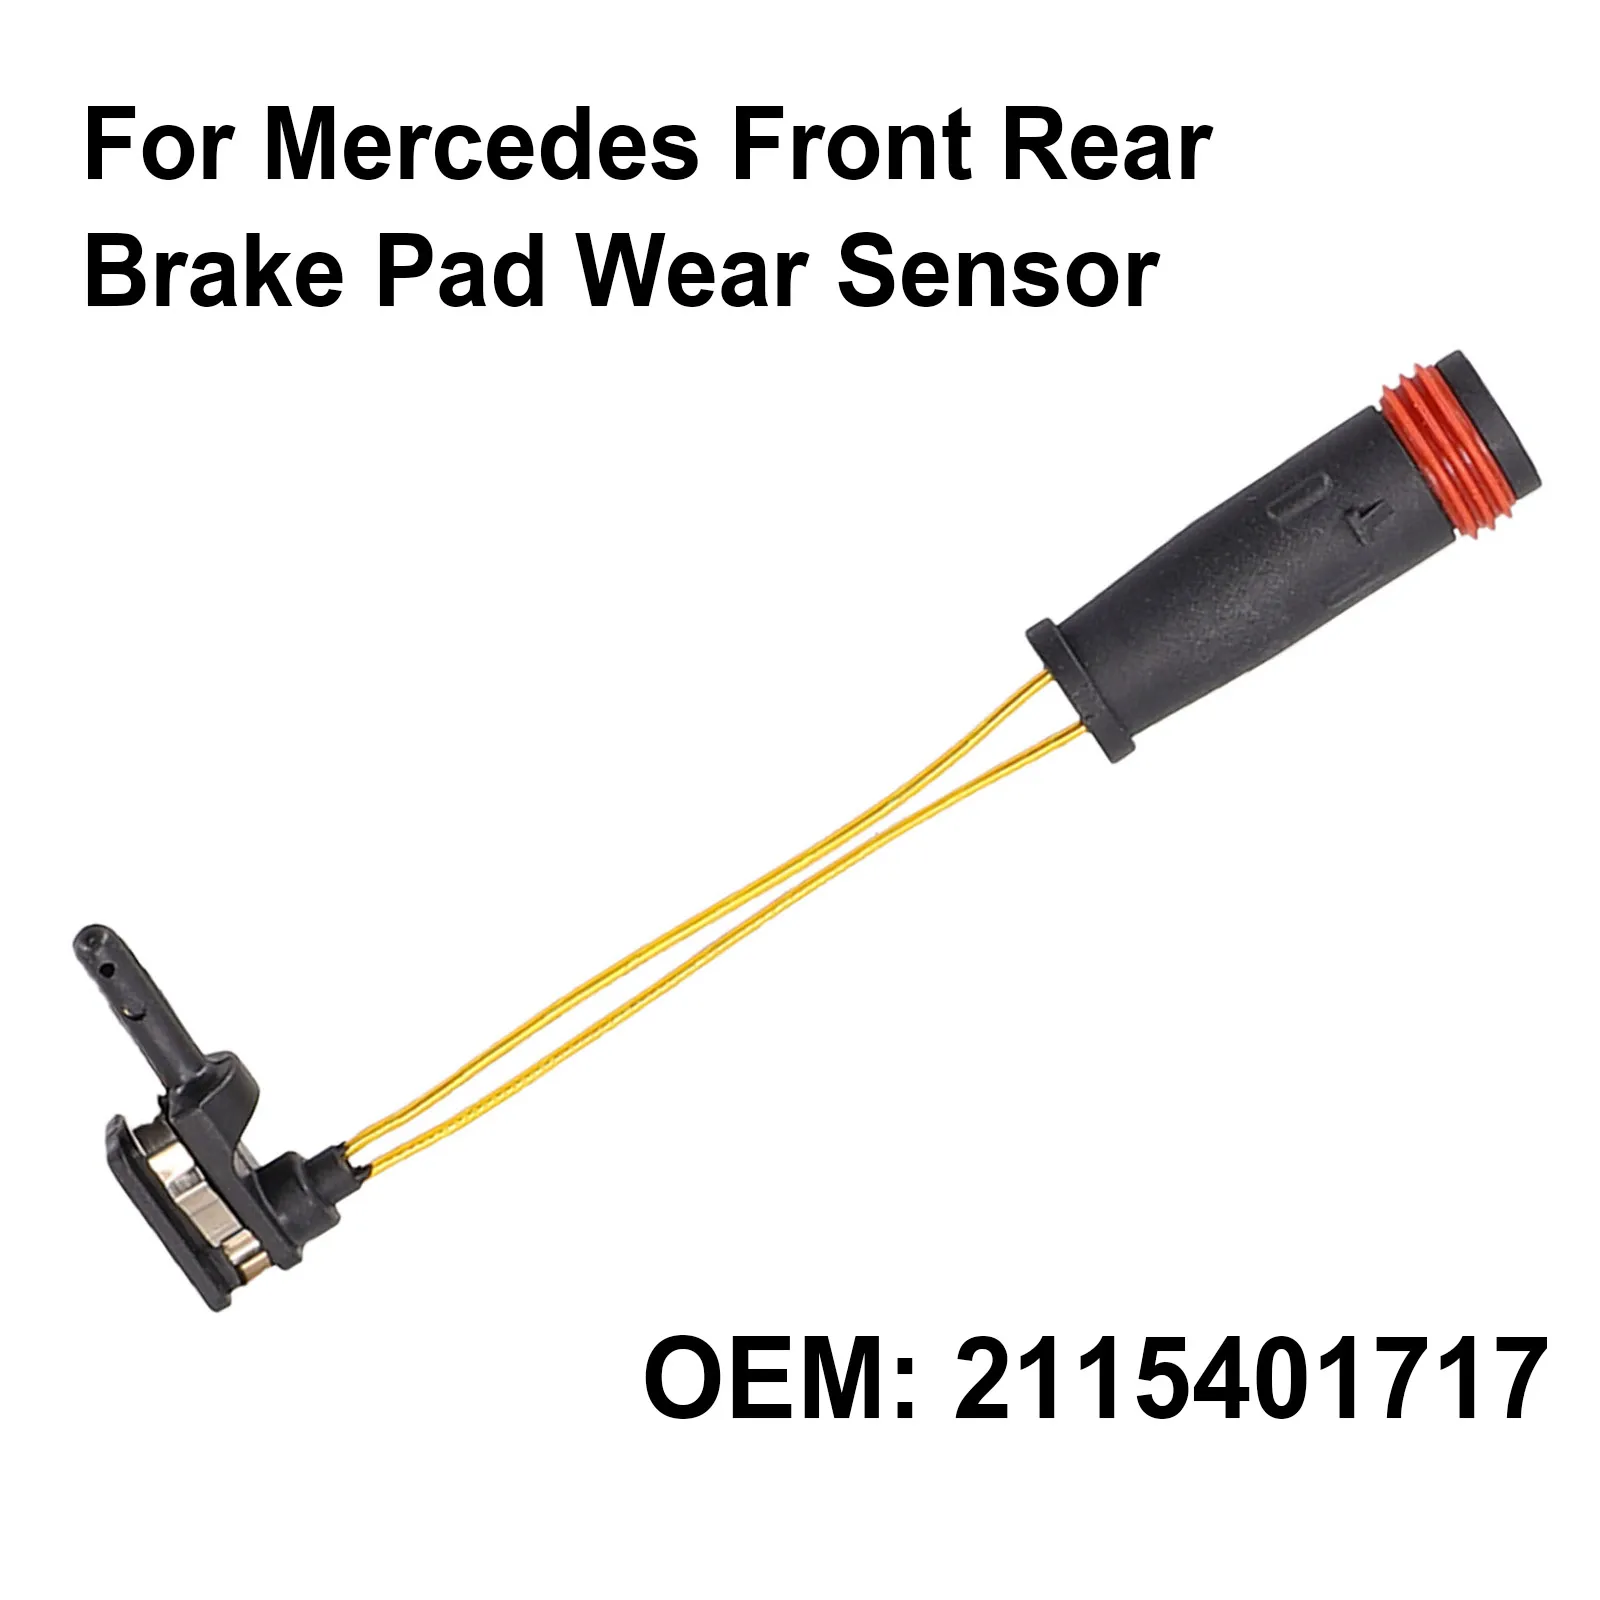 

Car Front Rear Brake Pad Wear Sensor W220 W203 W211 W221/W204/W212 Brake Induction Wire Replacement For Mercedes